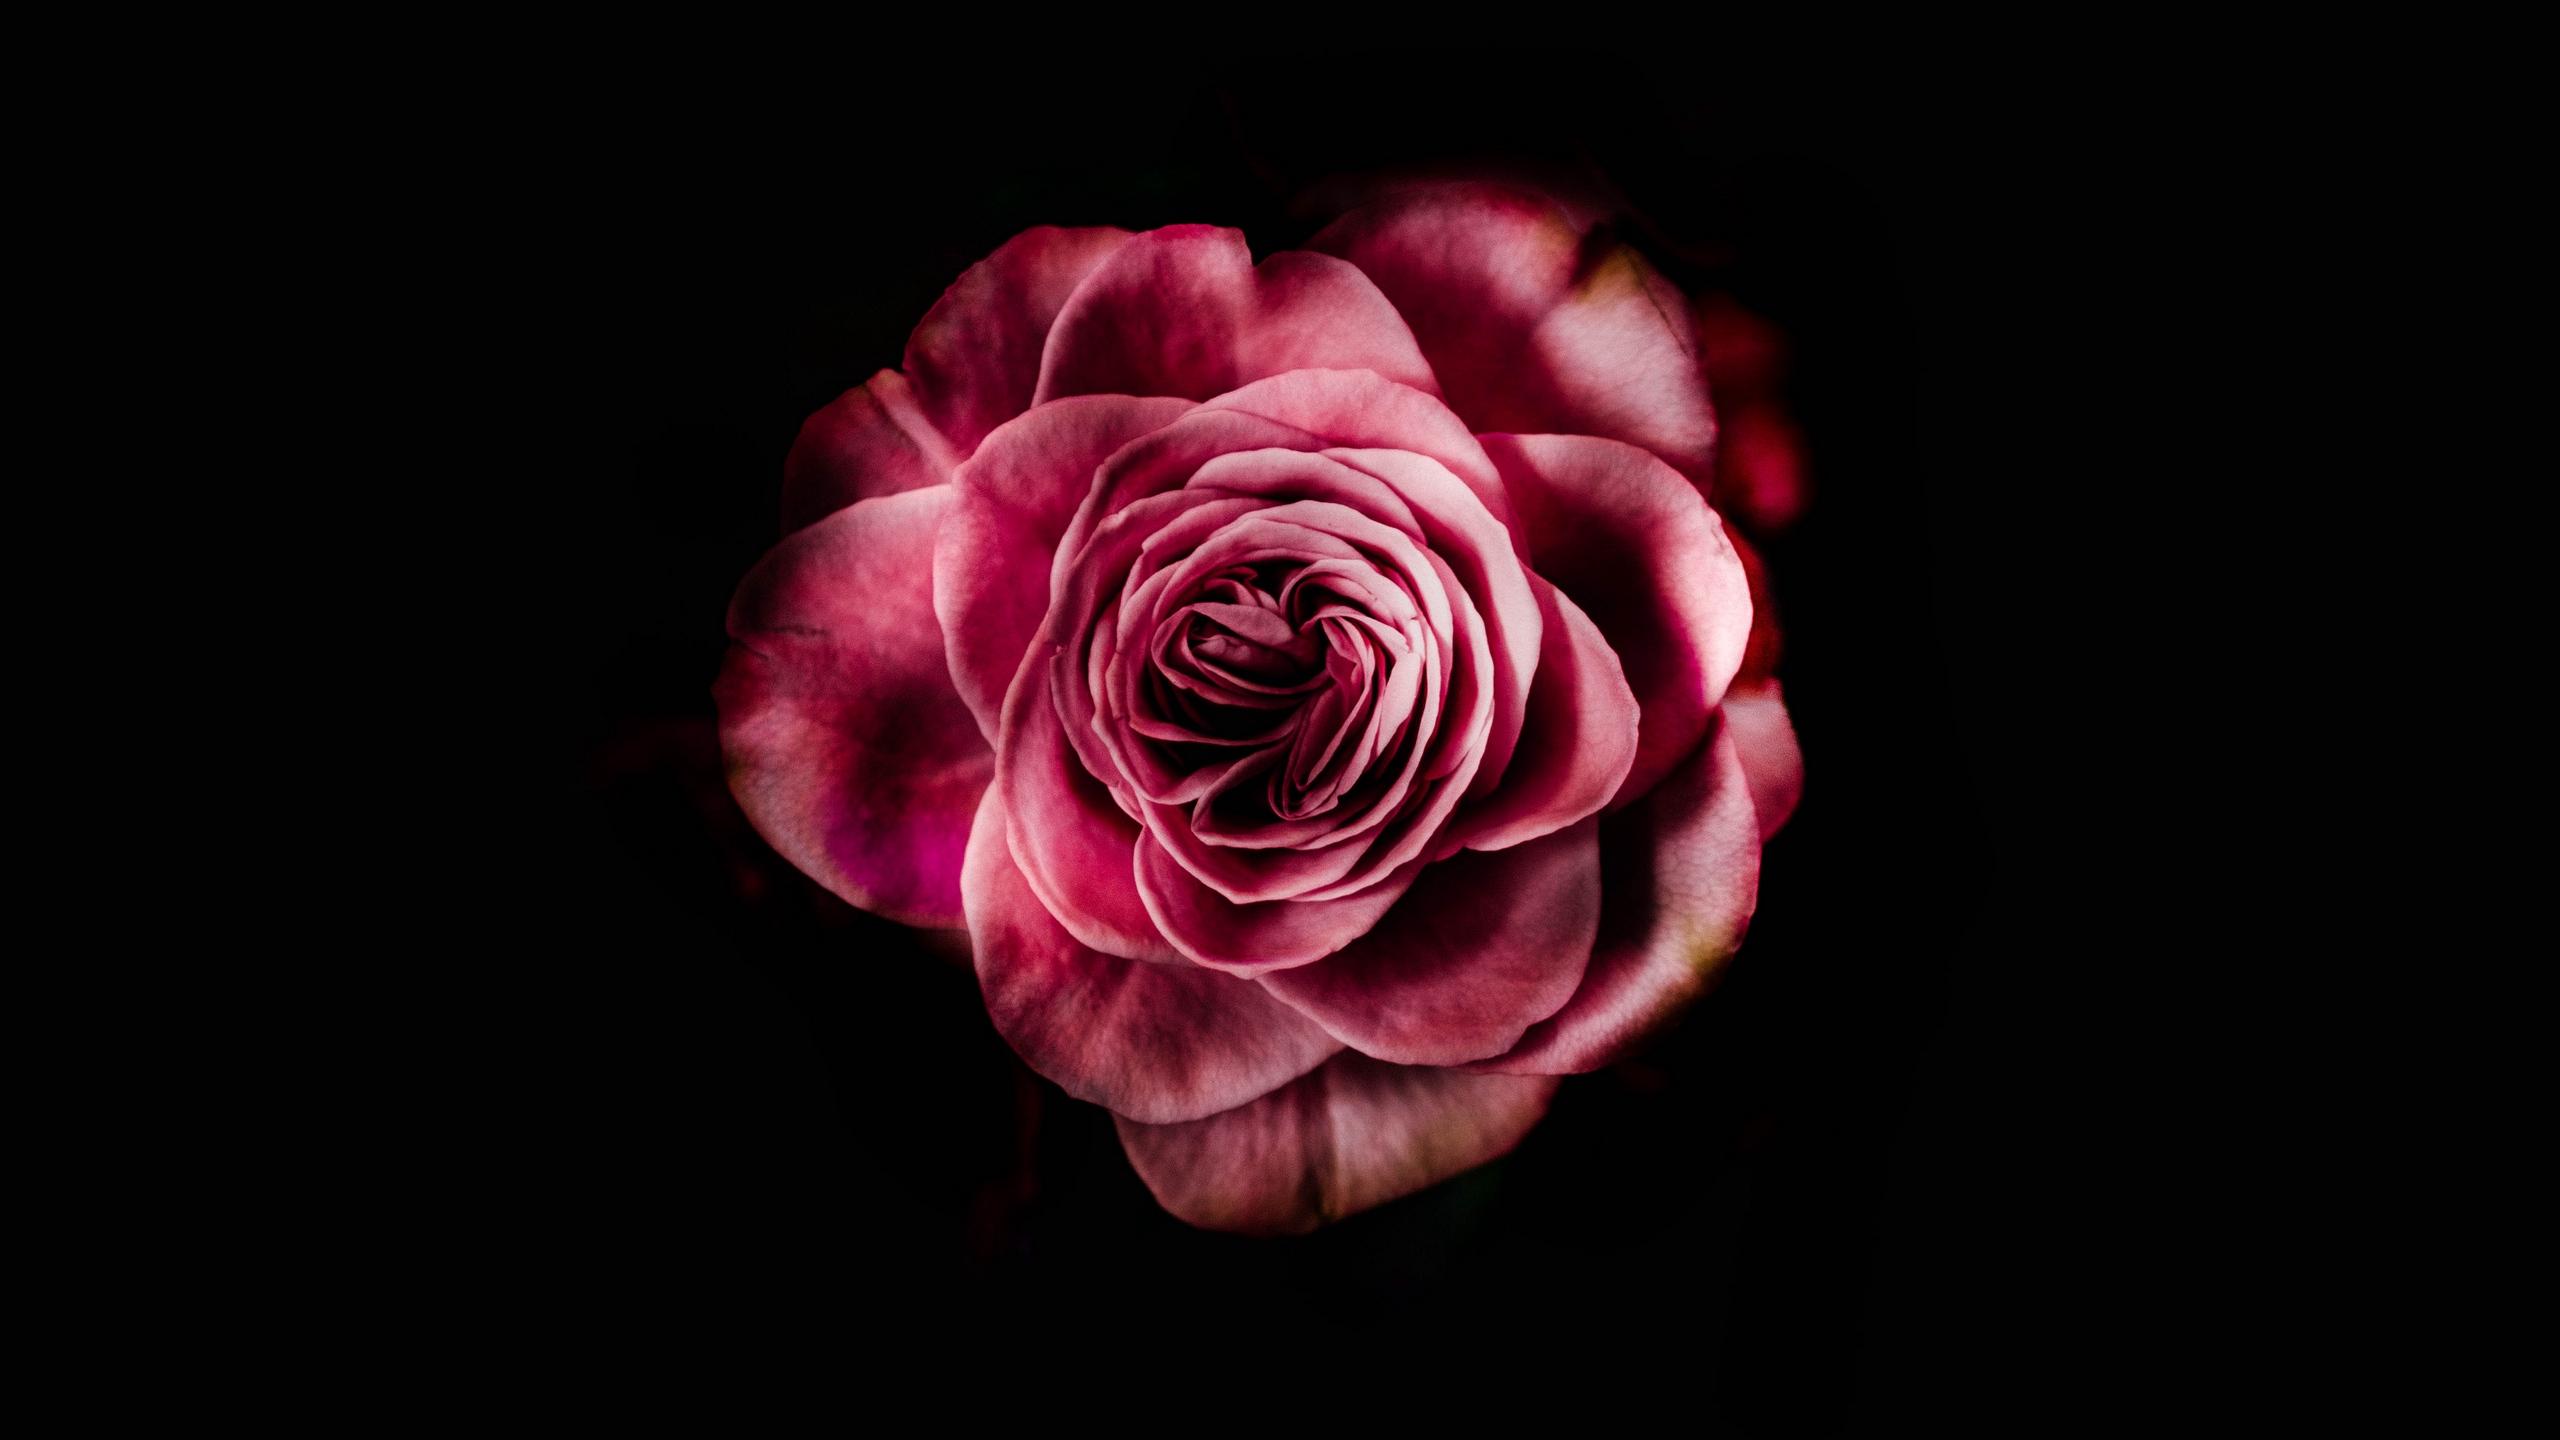 Download wallpaper 2560x1440 rose, bud, pink, dark background